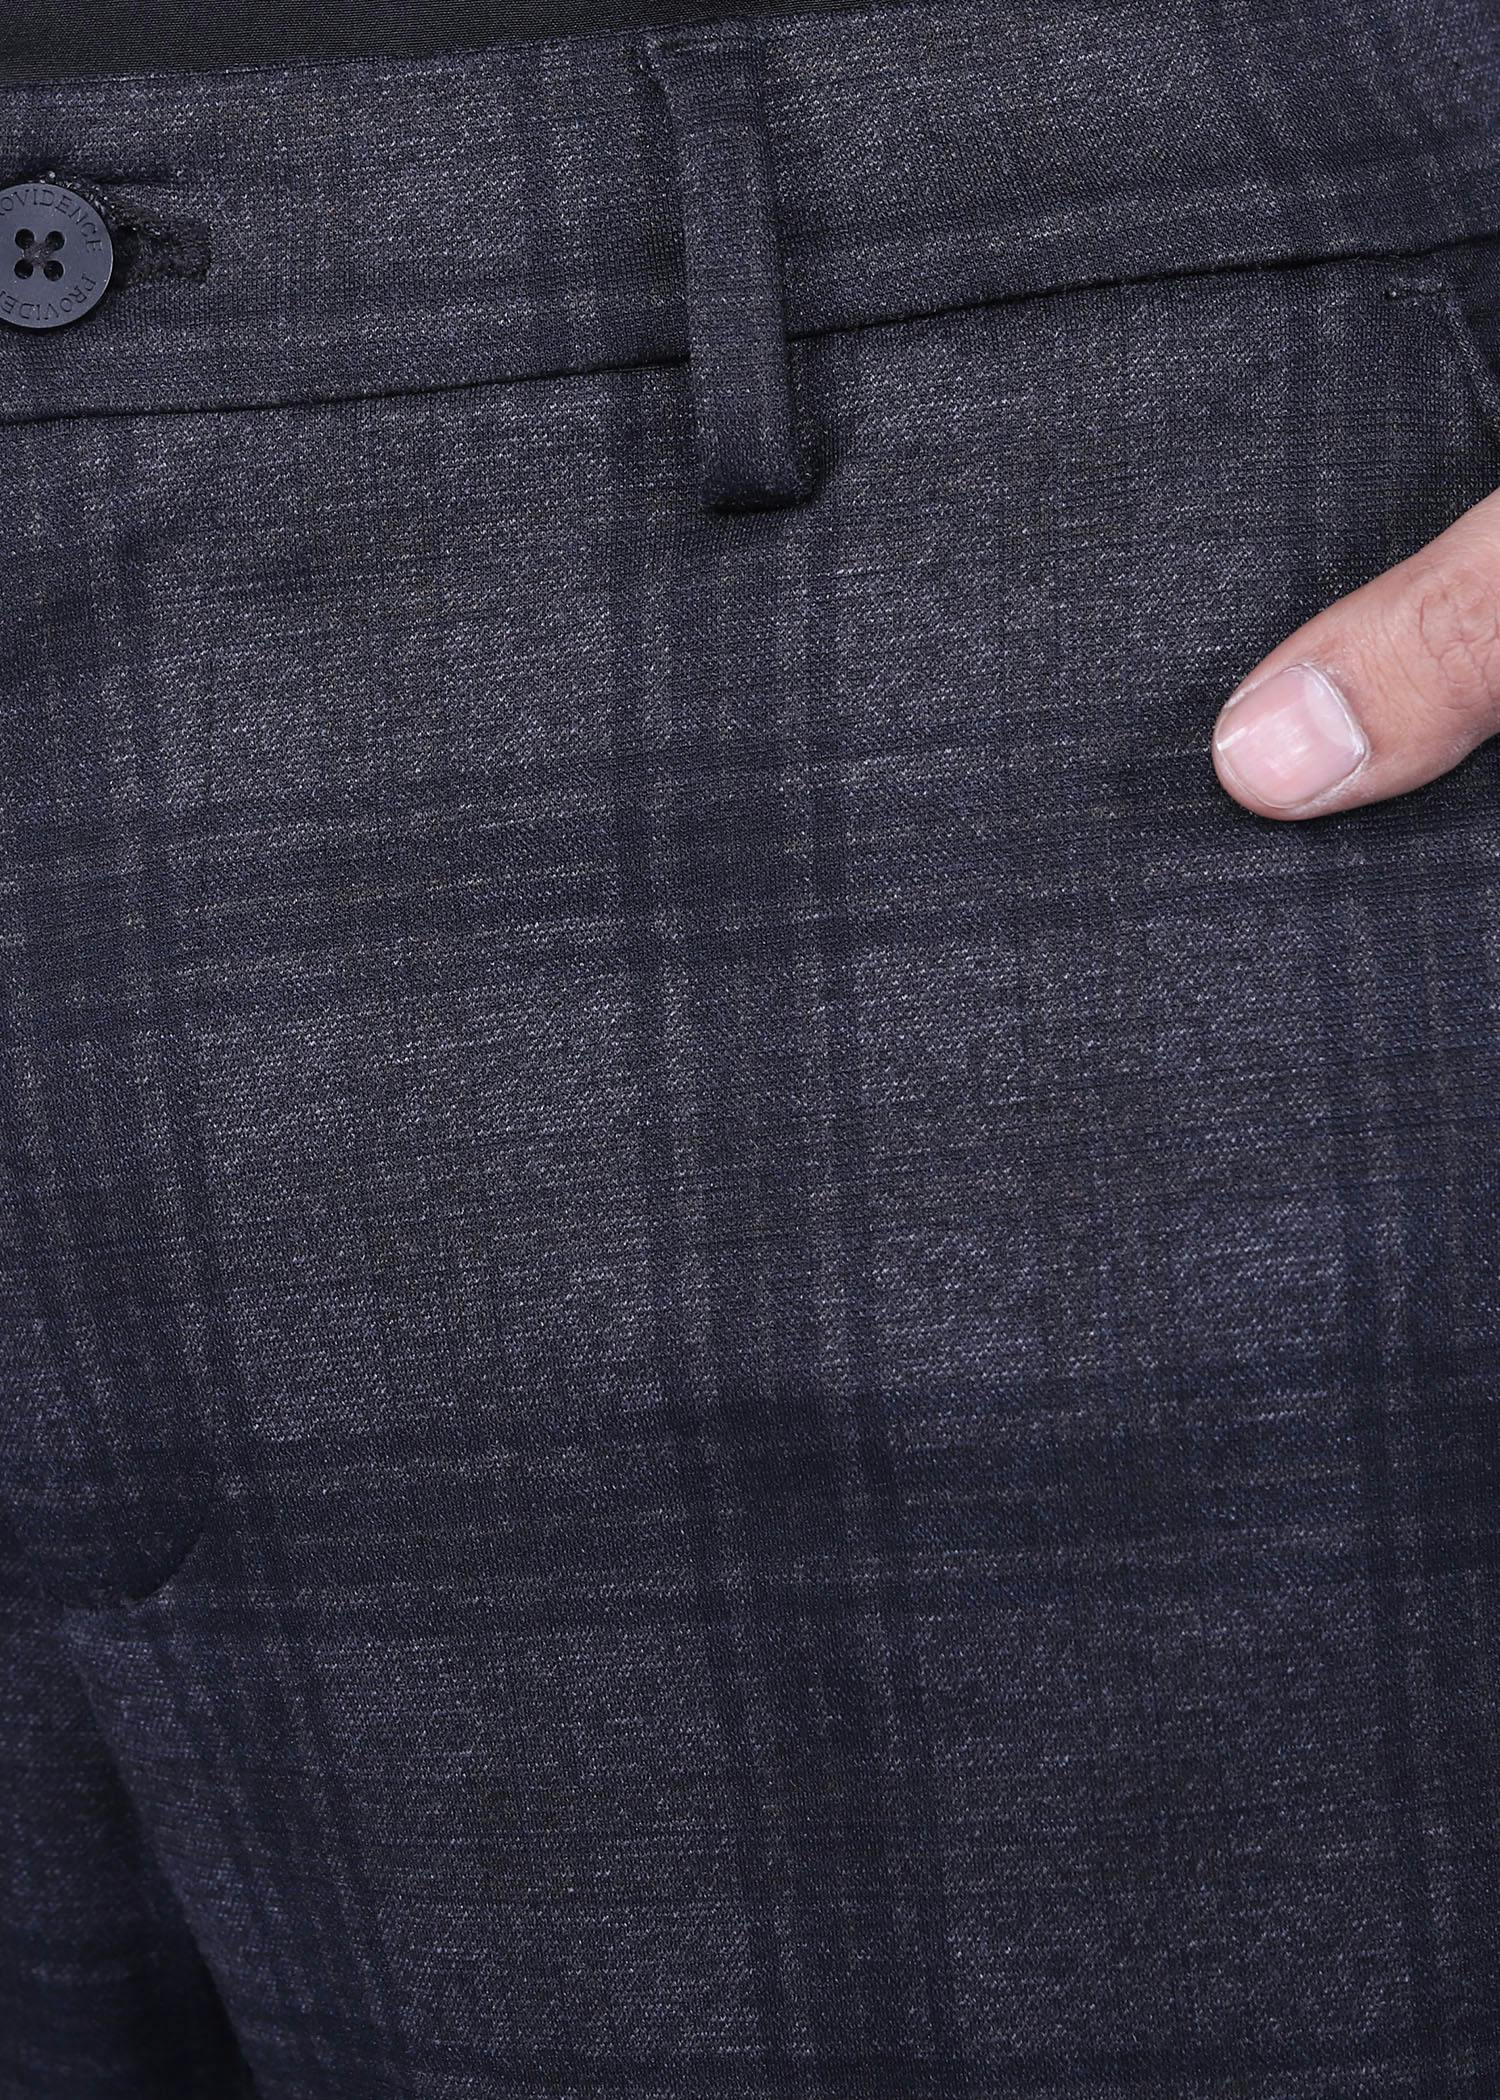 shanghai btm fromal pant black color waist belt view